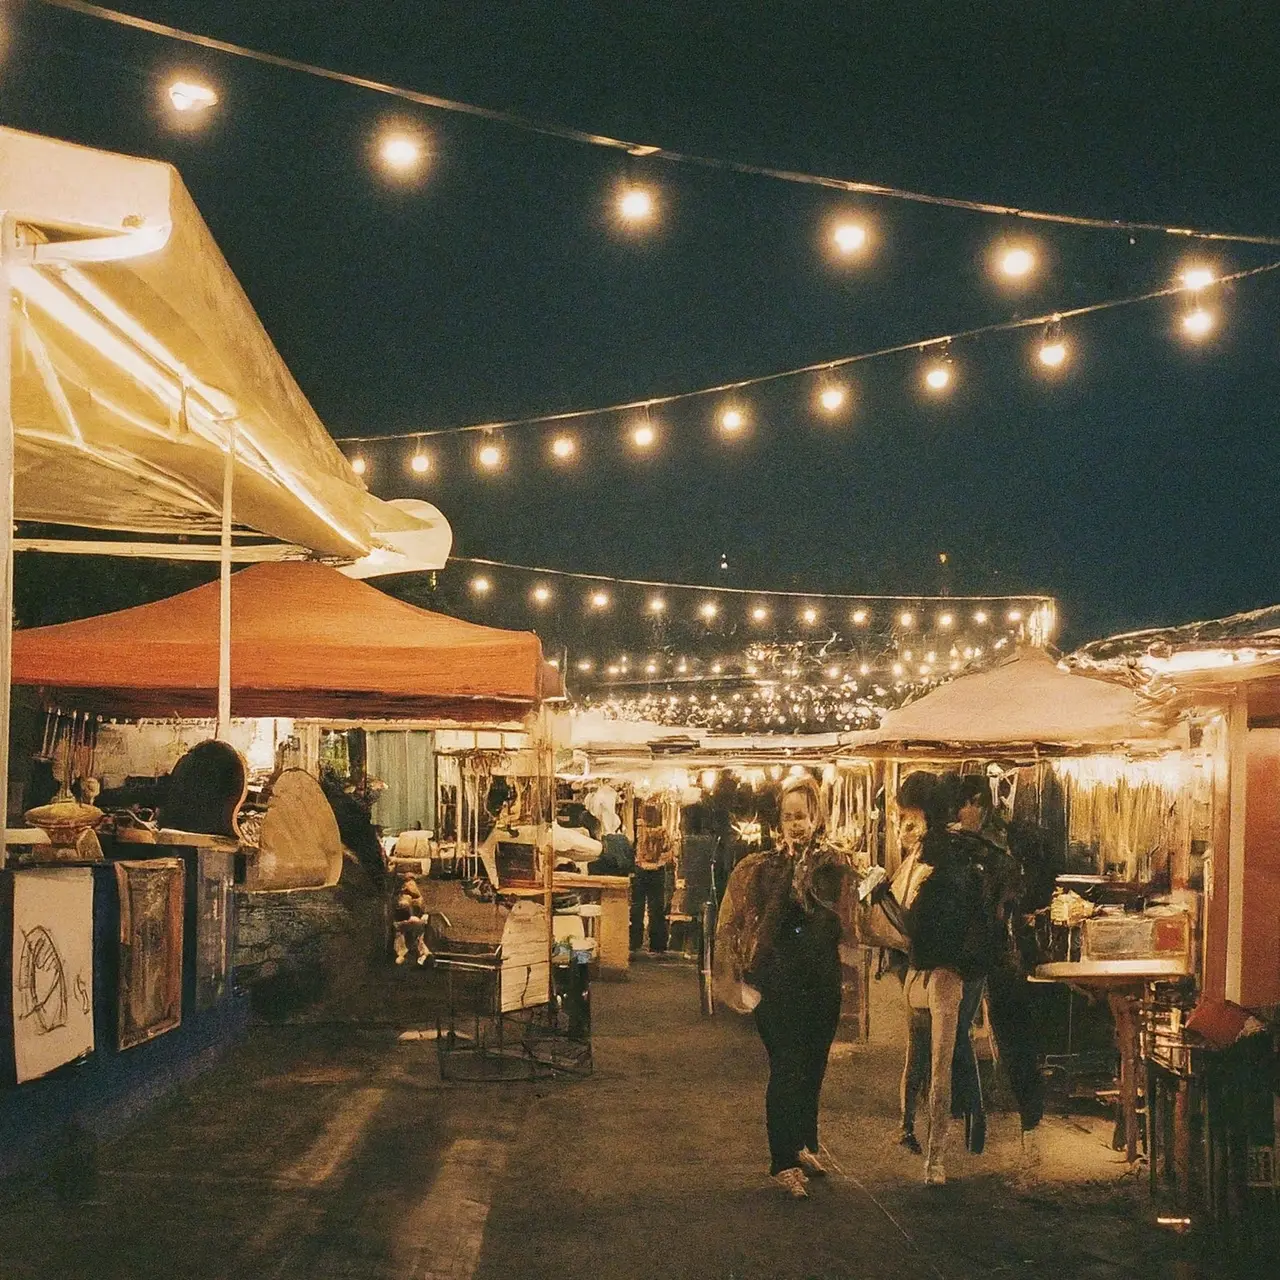 A vibrant street food market under twinkling evening lights. 35mm stock photo